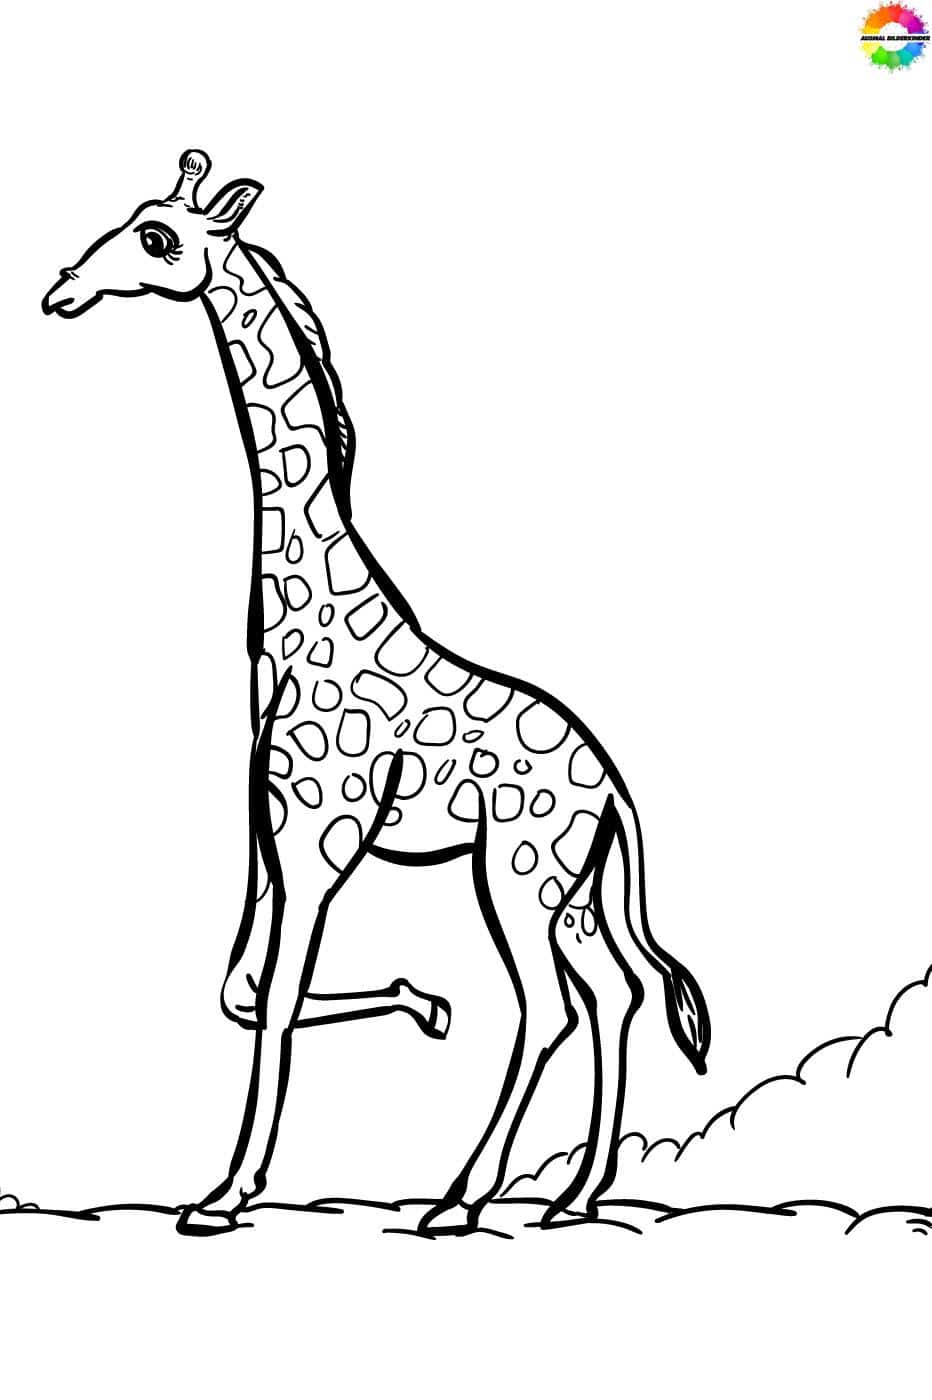 Giraffe-Ausmalbilder-ausmalbilderkinder.de-18